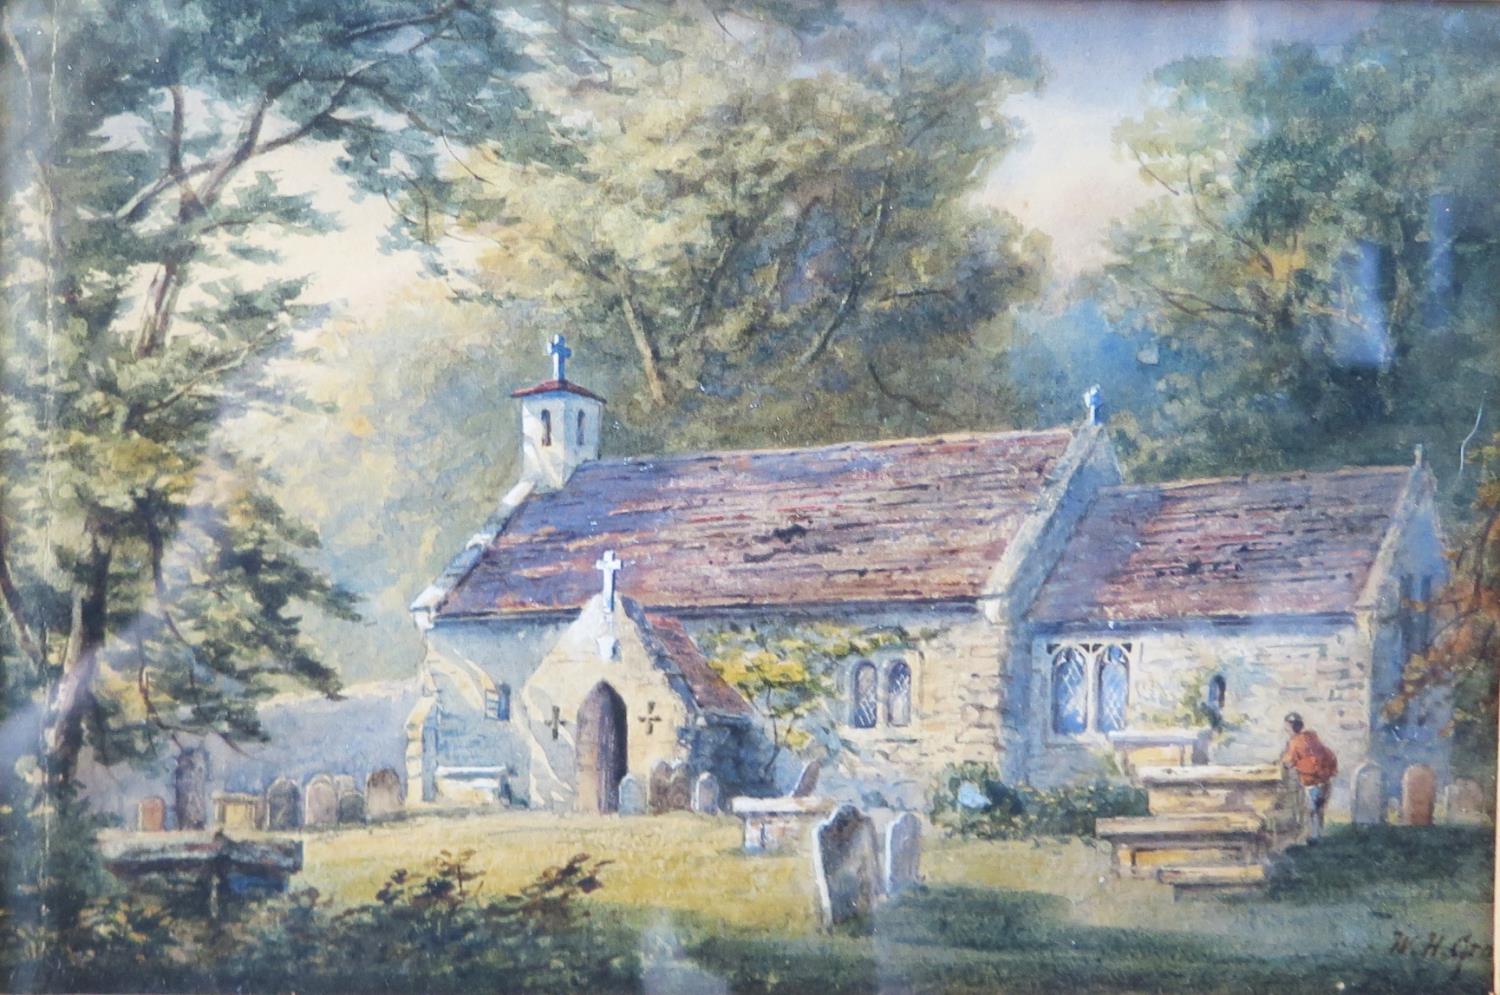 W.H. Gray (1810-1889)Churchyard with figure, watercolour, 21.5x14cm